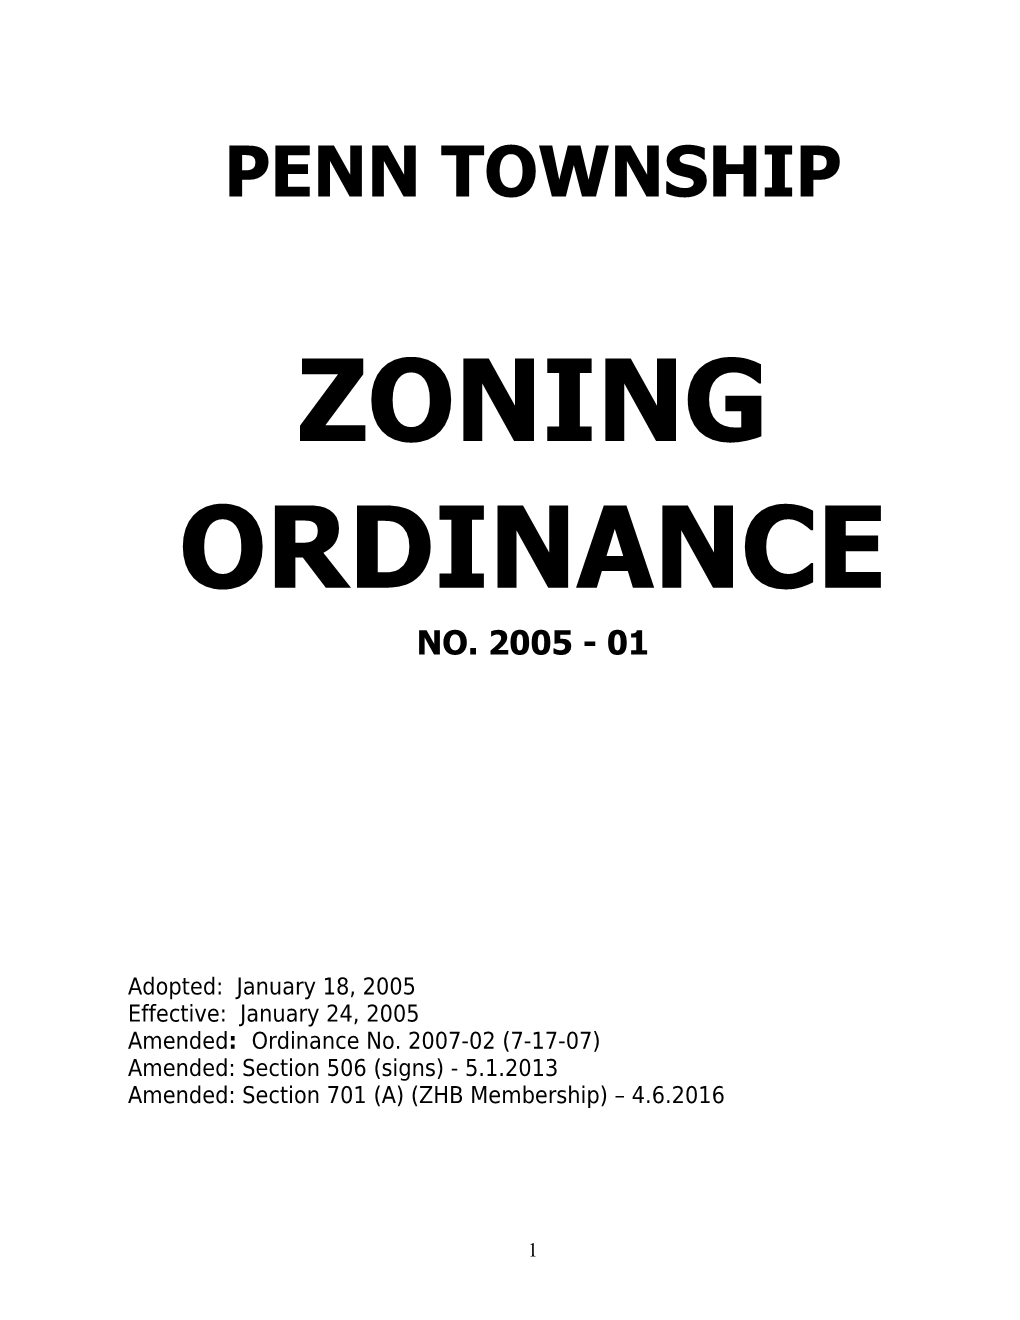 Penn Township